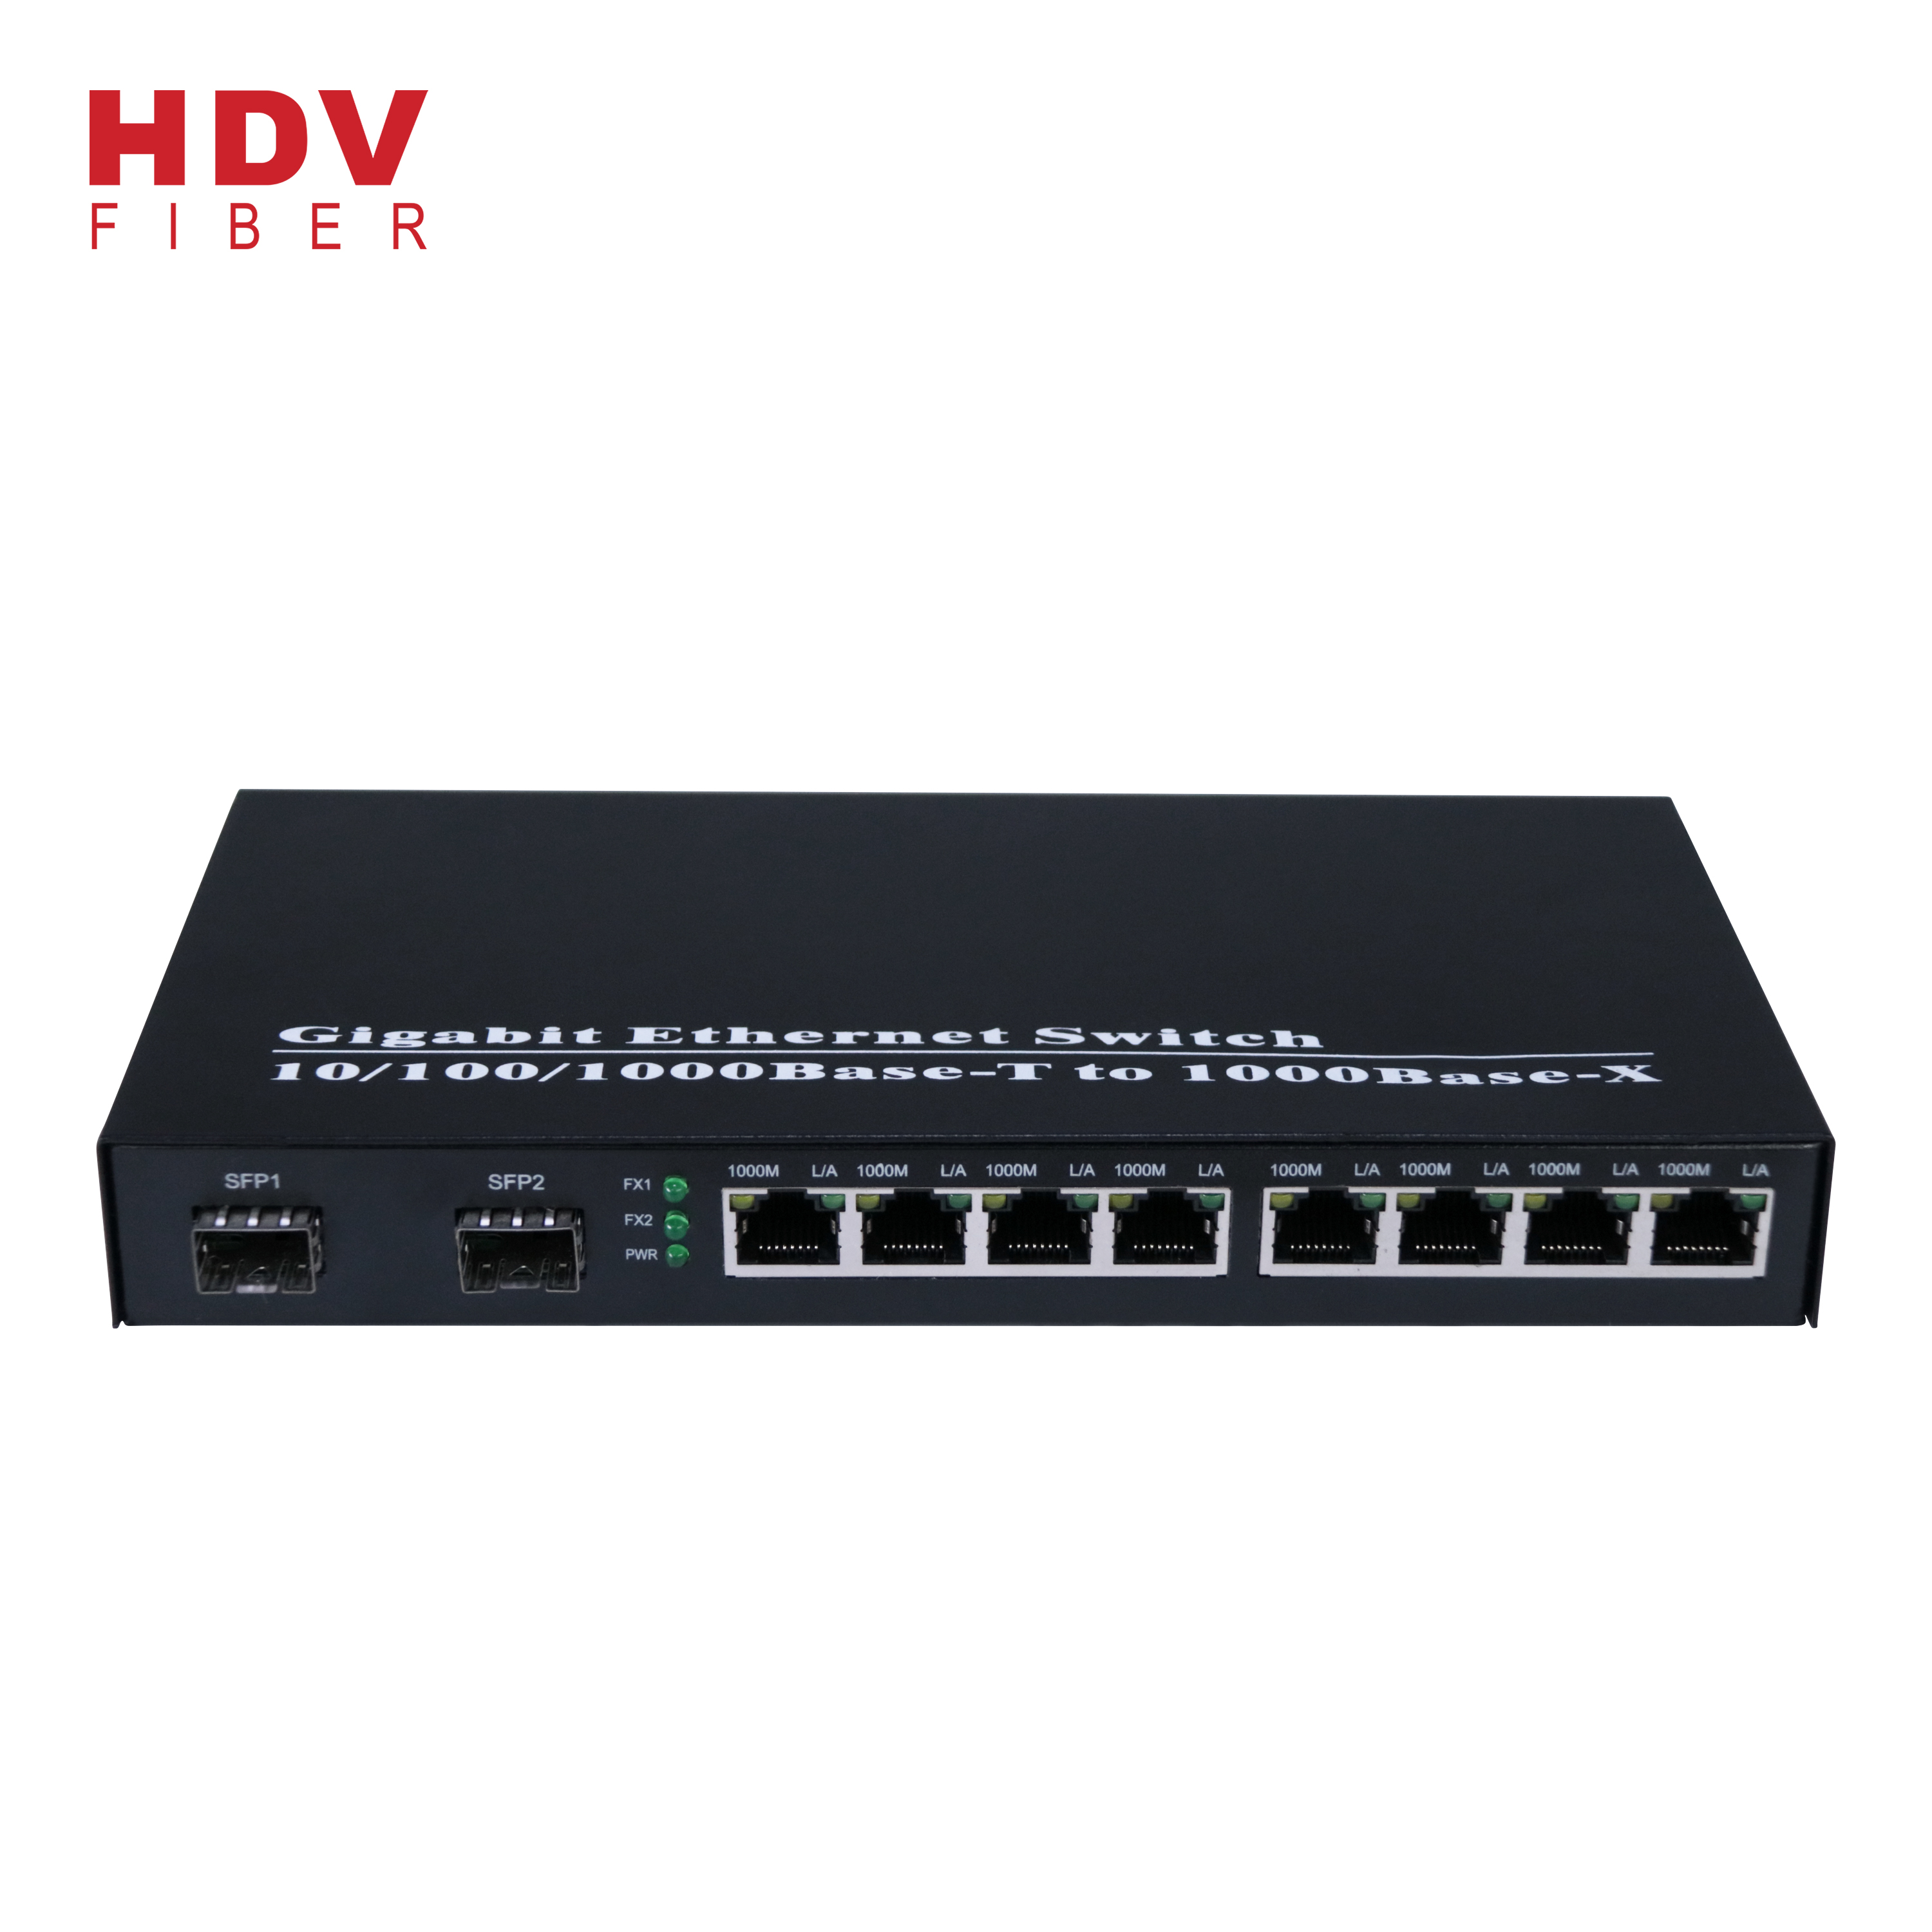 Managed Industrial Ethernet Switch - China Supplier 2 SFP Port 8 Ethernet Ports Optic Fiber Switch 10/100/1000M Media Converter – HDV